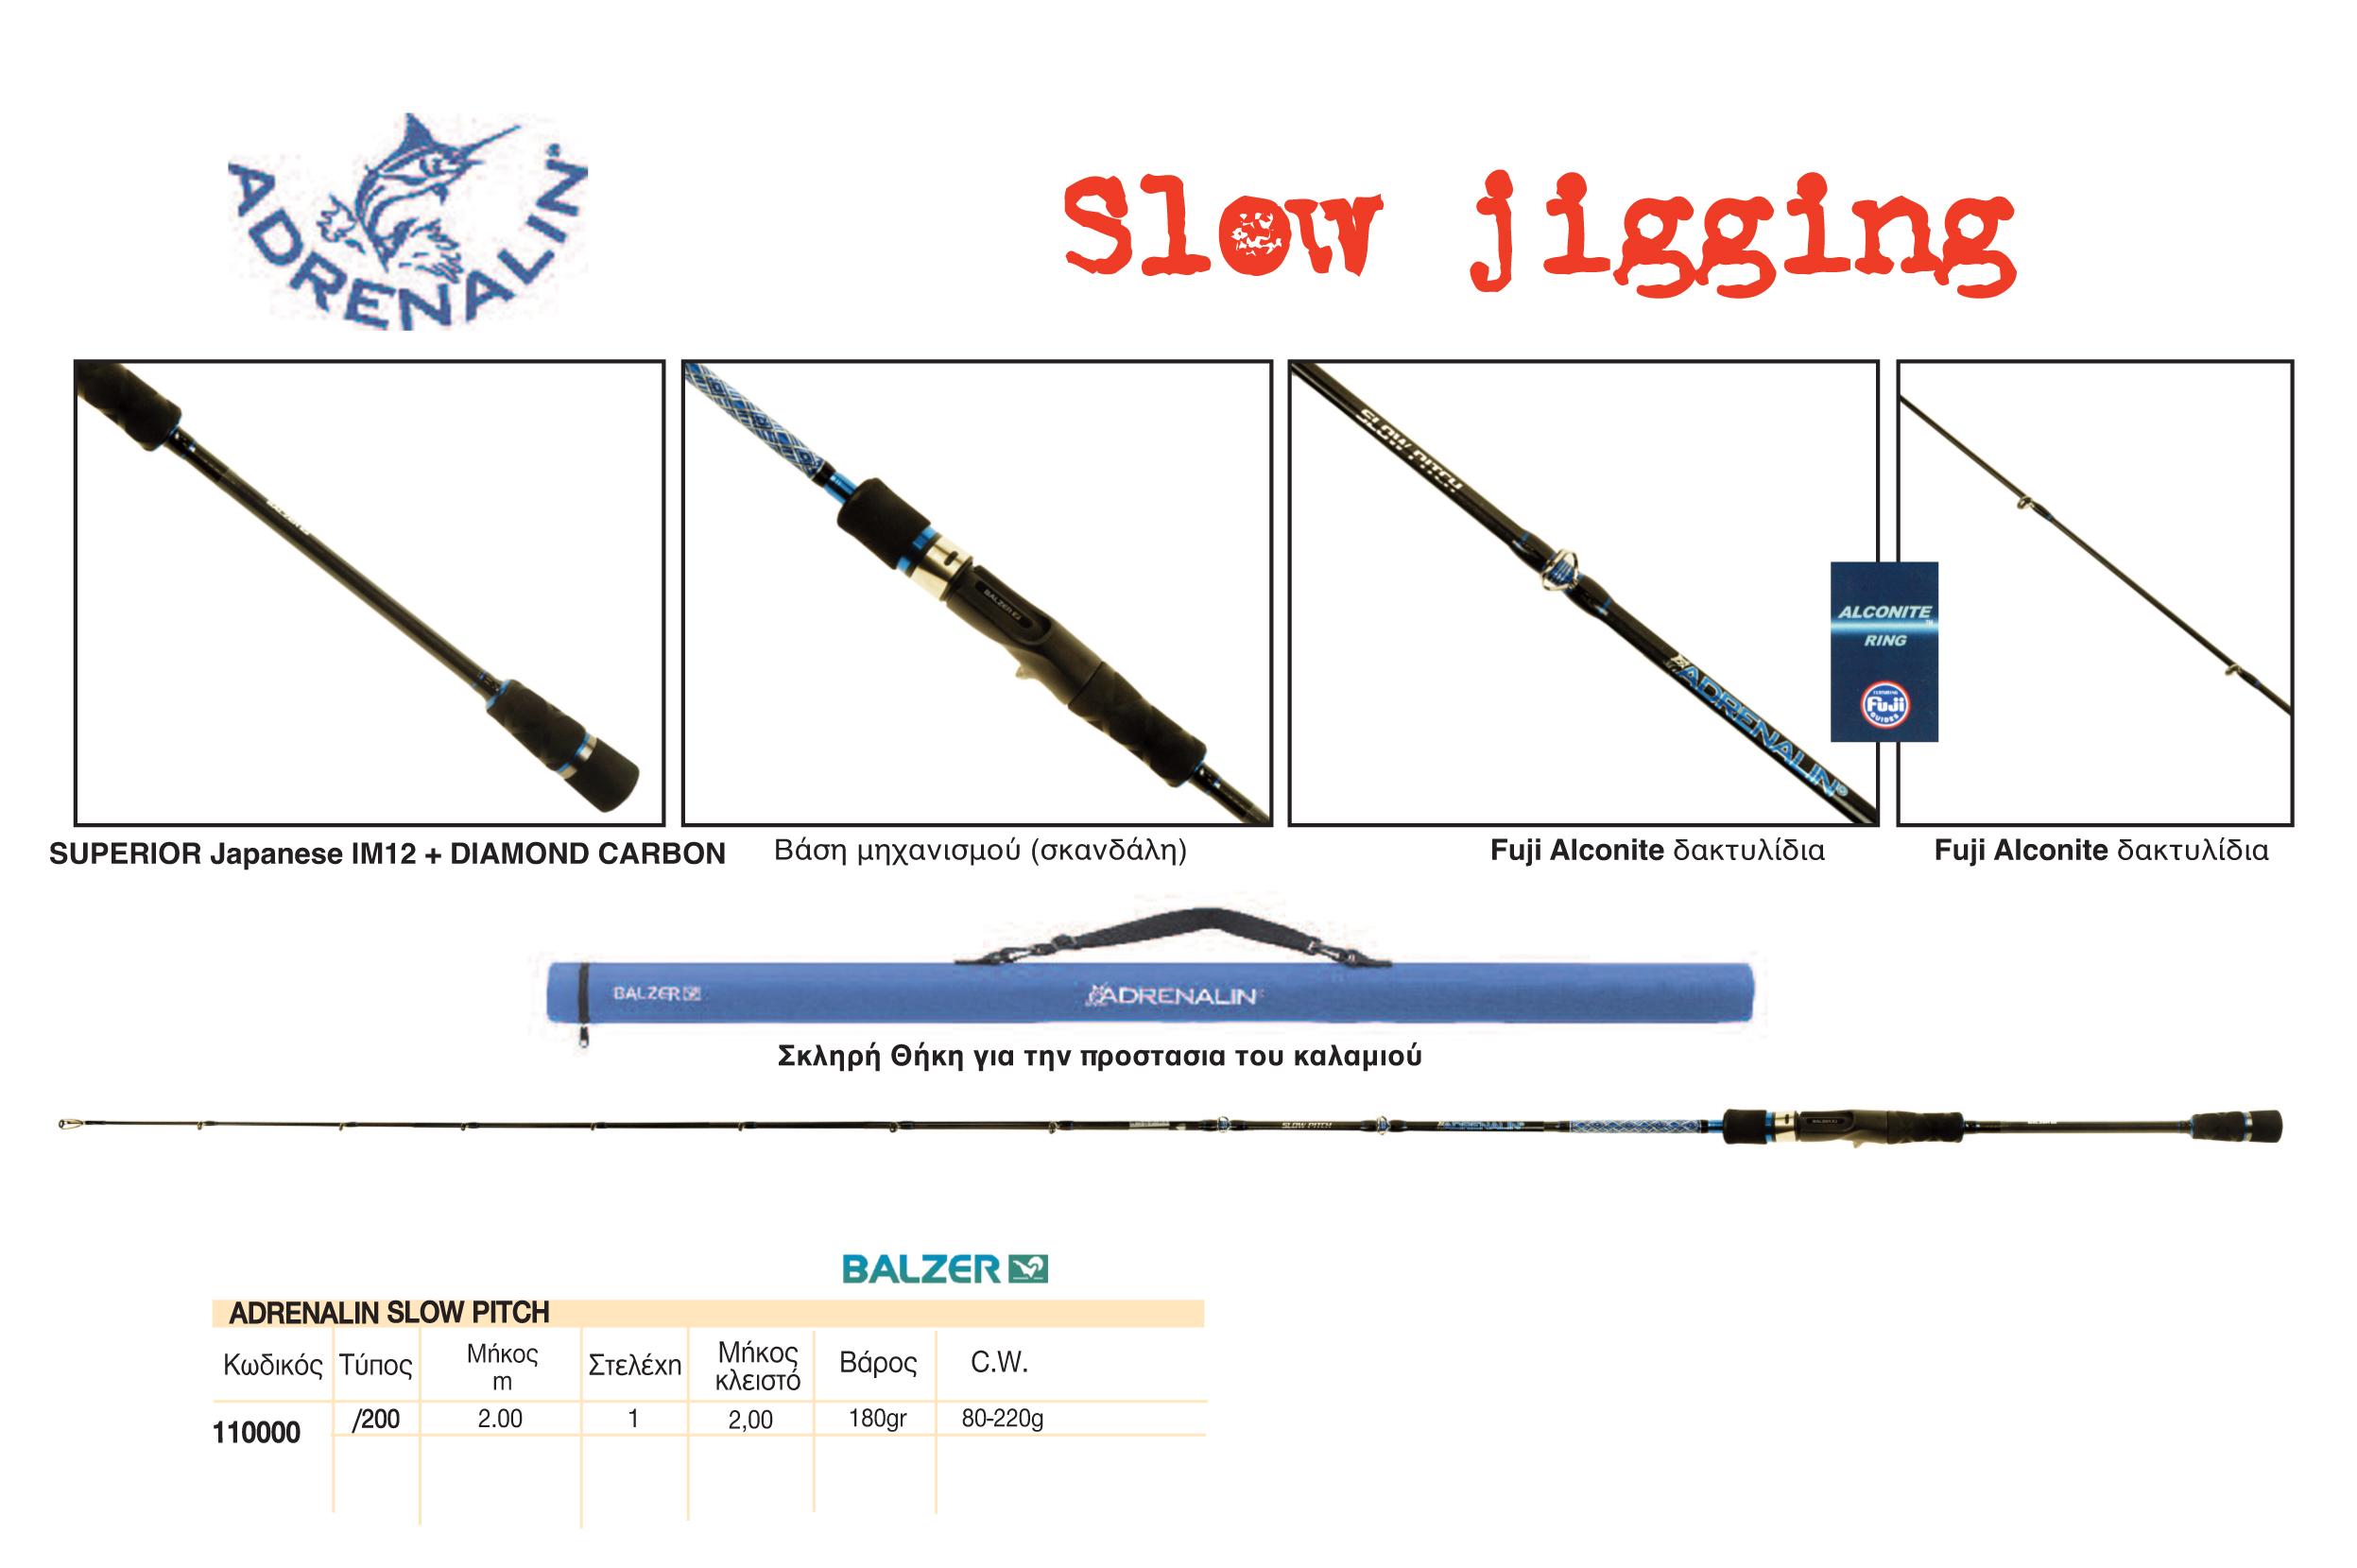 Fishing Rods - Fishing Rods for Boat - Fishing Rods for Slow Jigging -  Fishing Rods Balzer Adrenalin Slow Pitch 110000-200